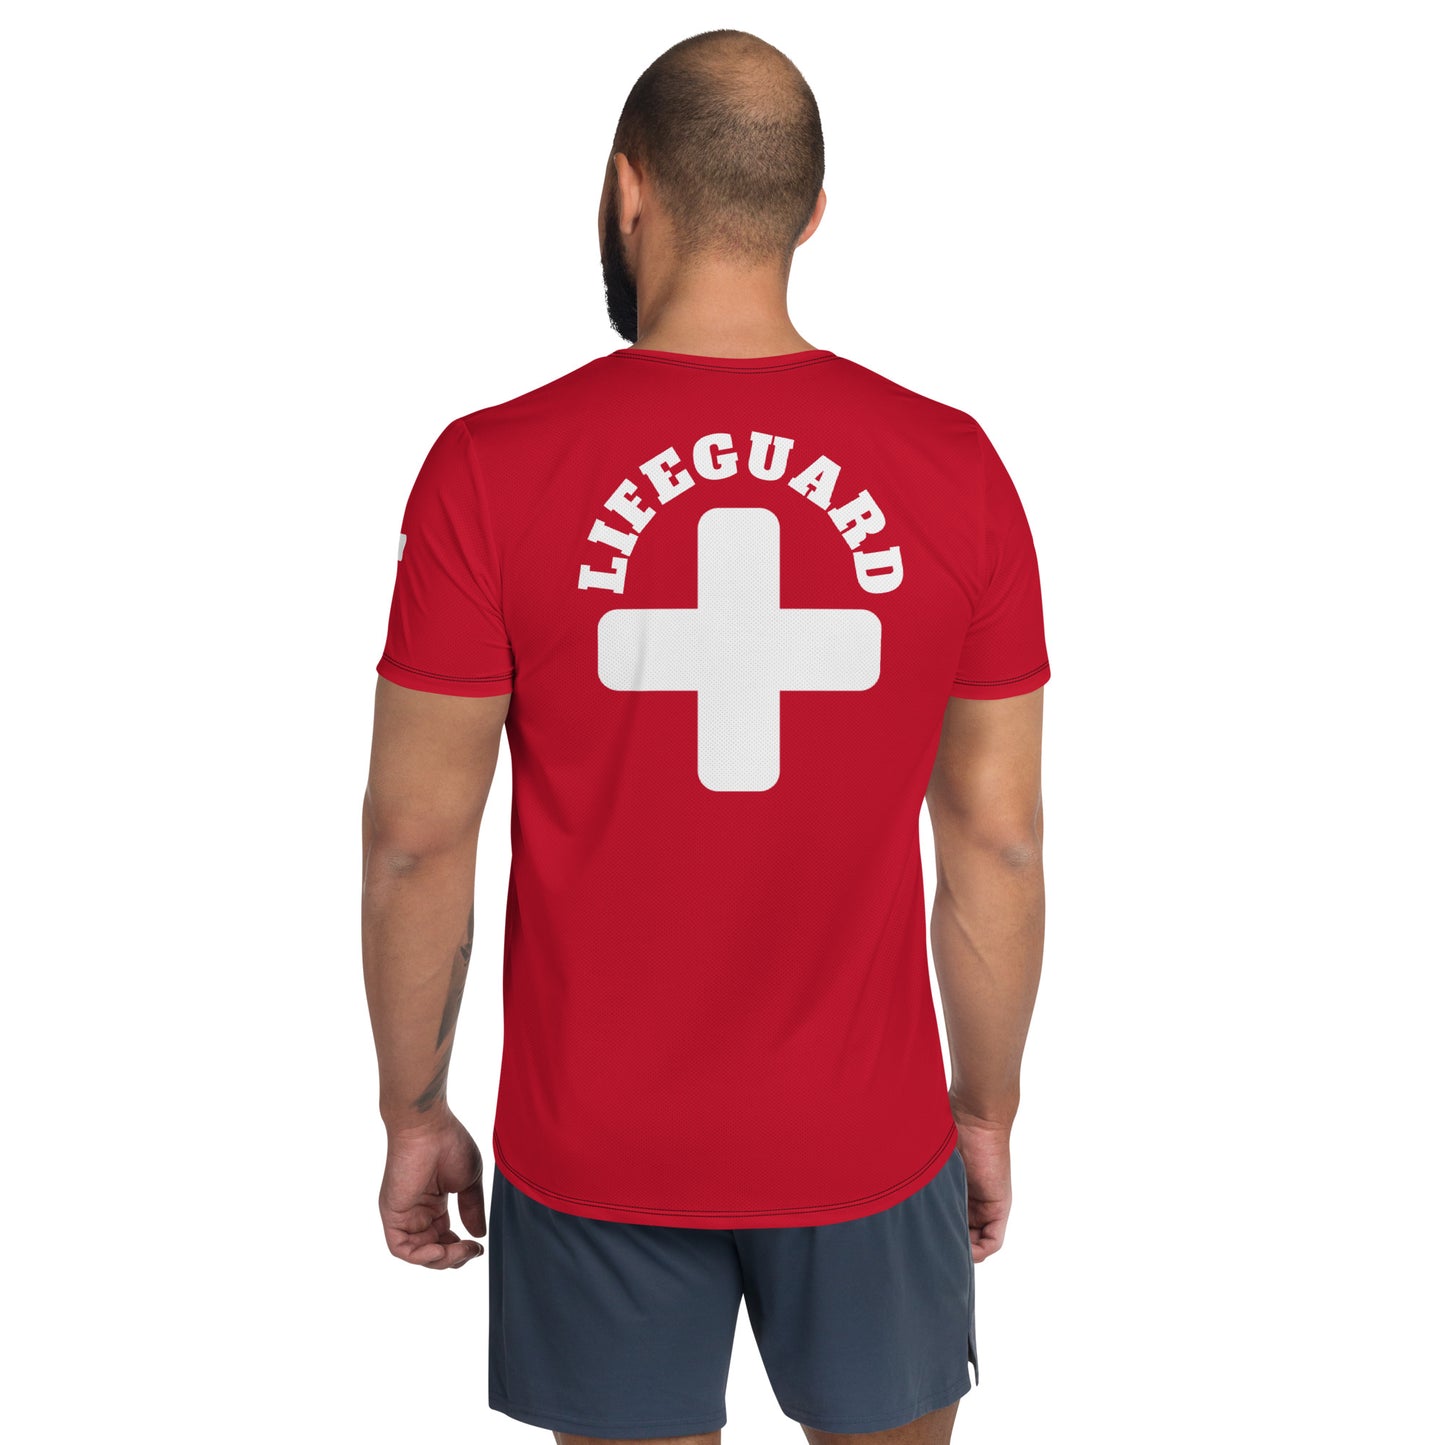 Lifeguard Swim Wear Athletic T-shirt